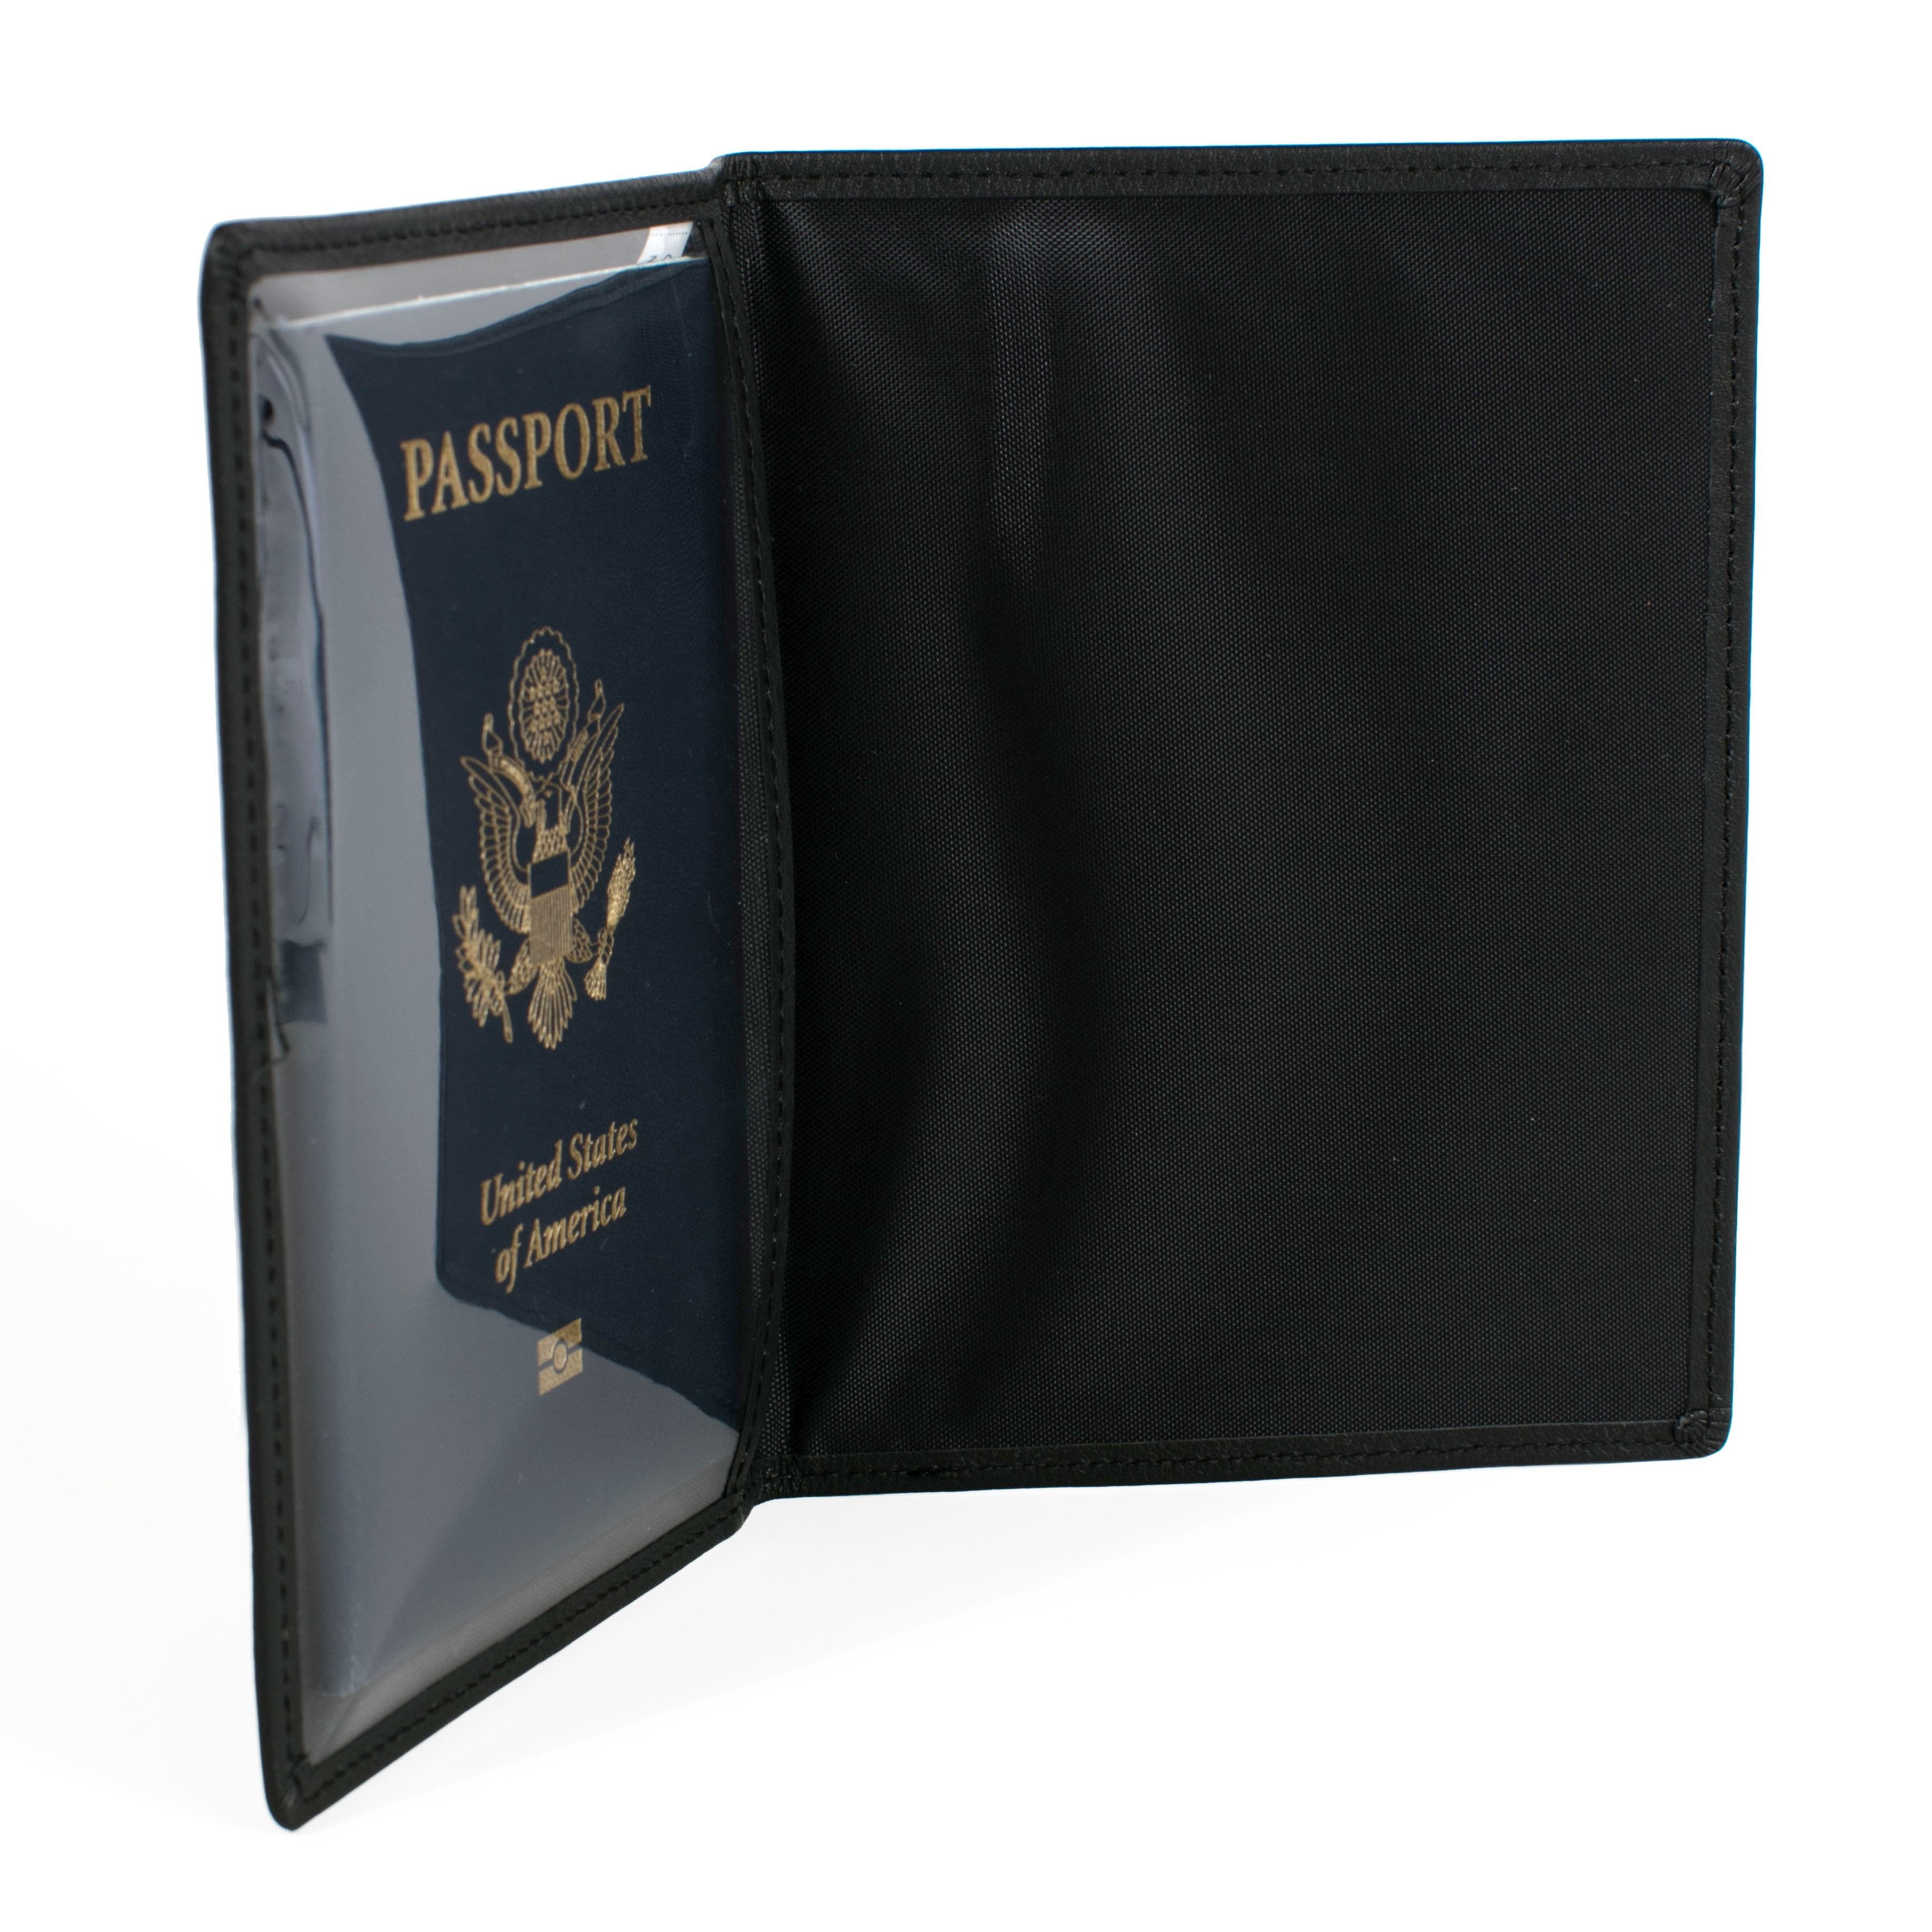 Passport Holder Cover Wallet RFID Blocking Leather Card Case